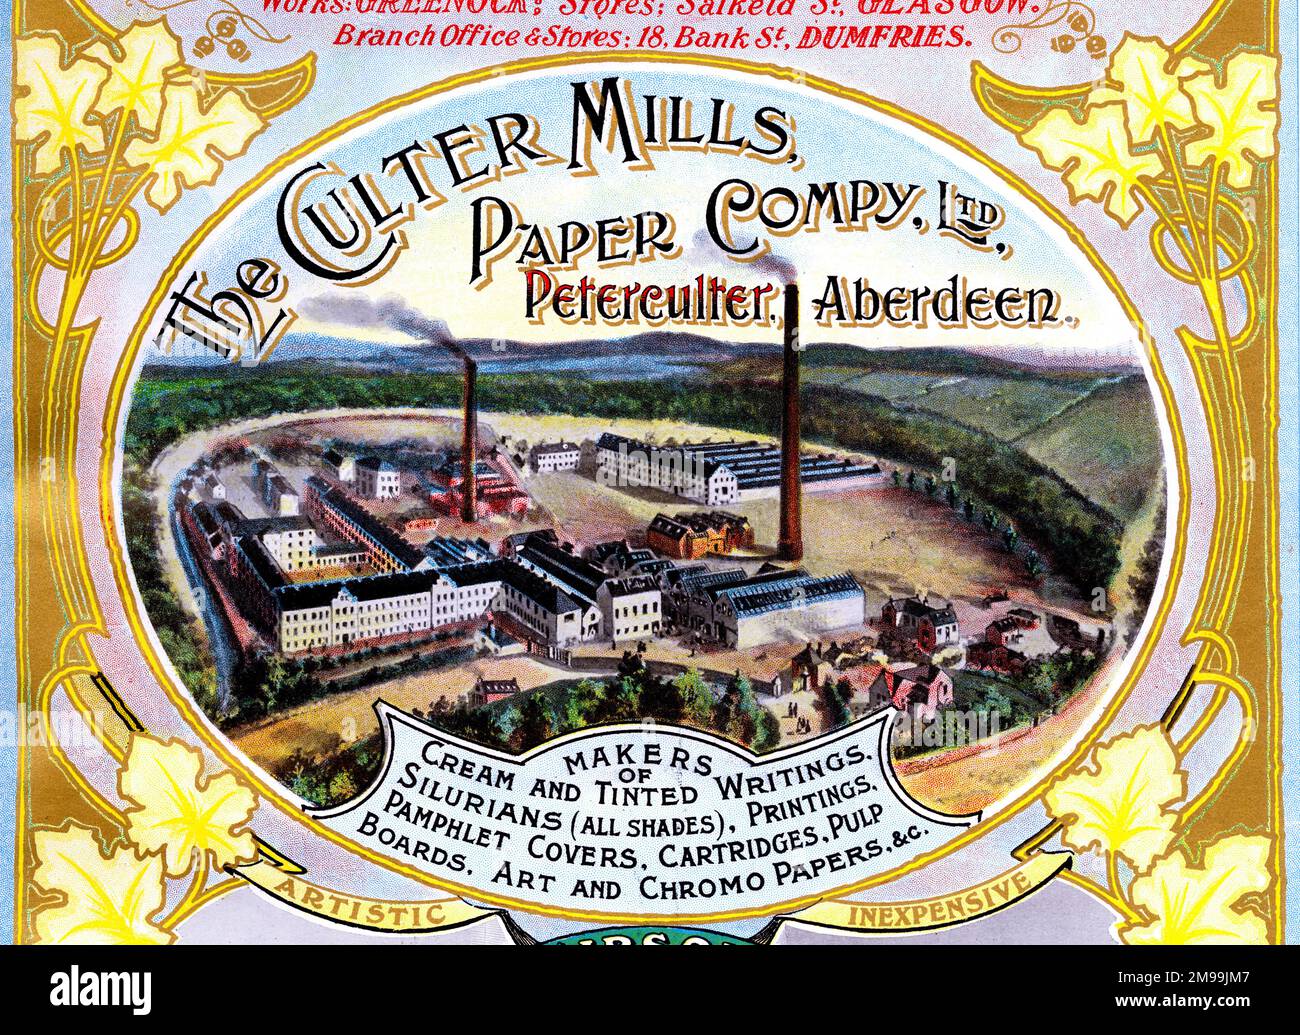 Advert, The Culter Mills Paper Company Ltd, Peterculter, Aberdeen, Scotland. Stock Photo